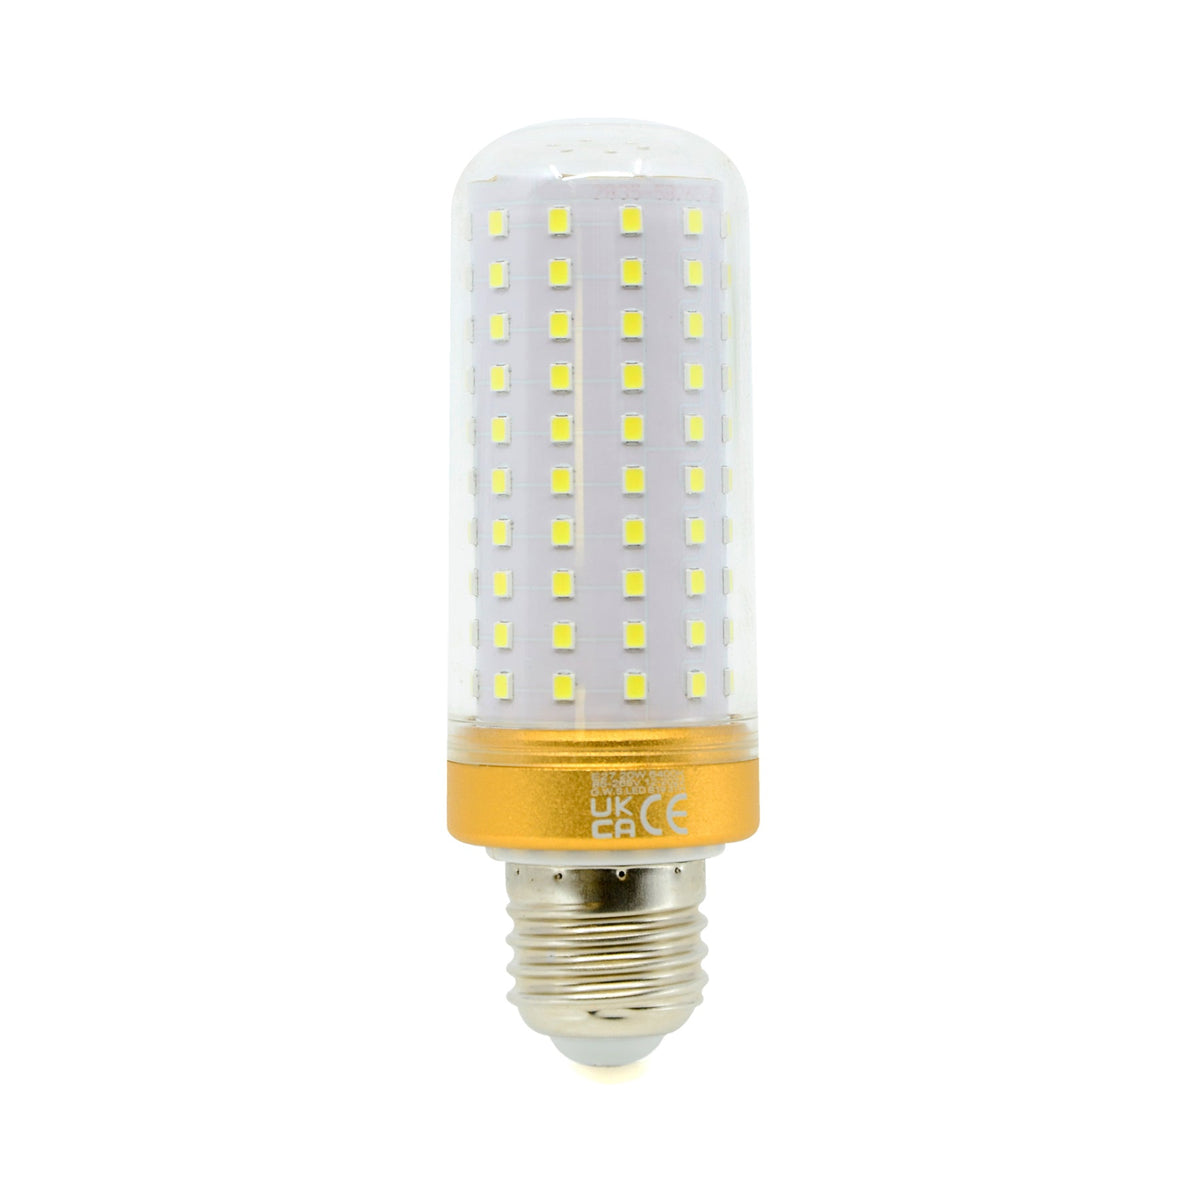 G.W.S LED Wholesale LED Bulbs 20W / Warm White (3000K) / 1 E27 Edison Screw LED Corn Bulb